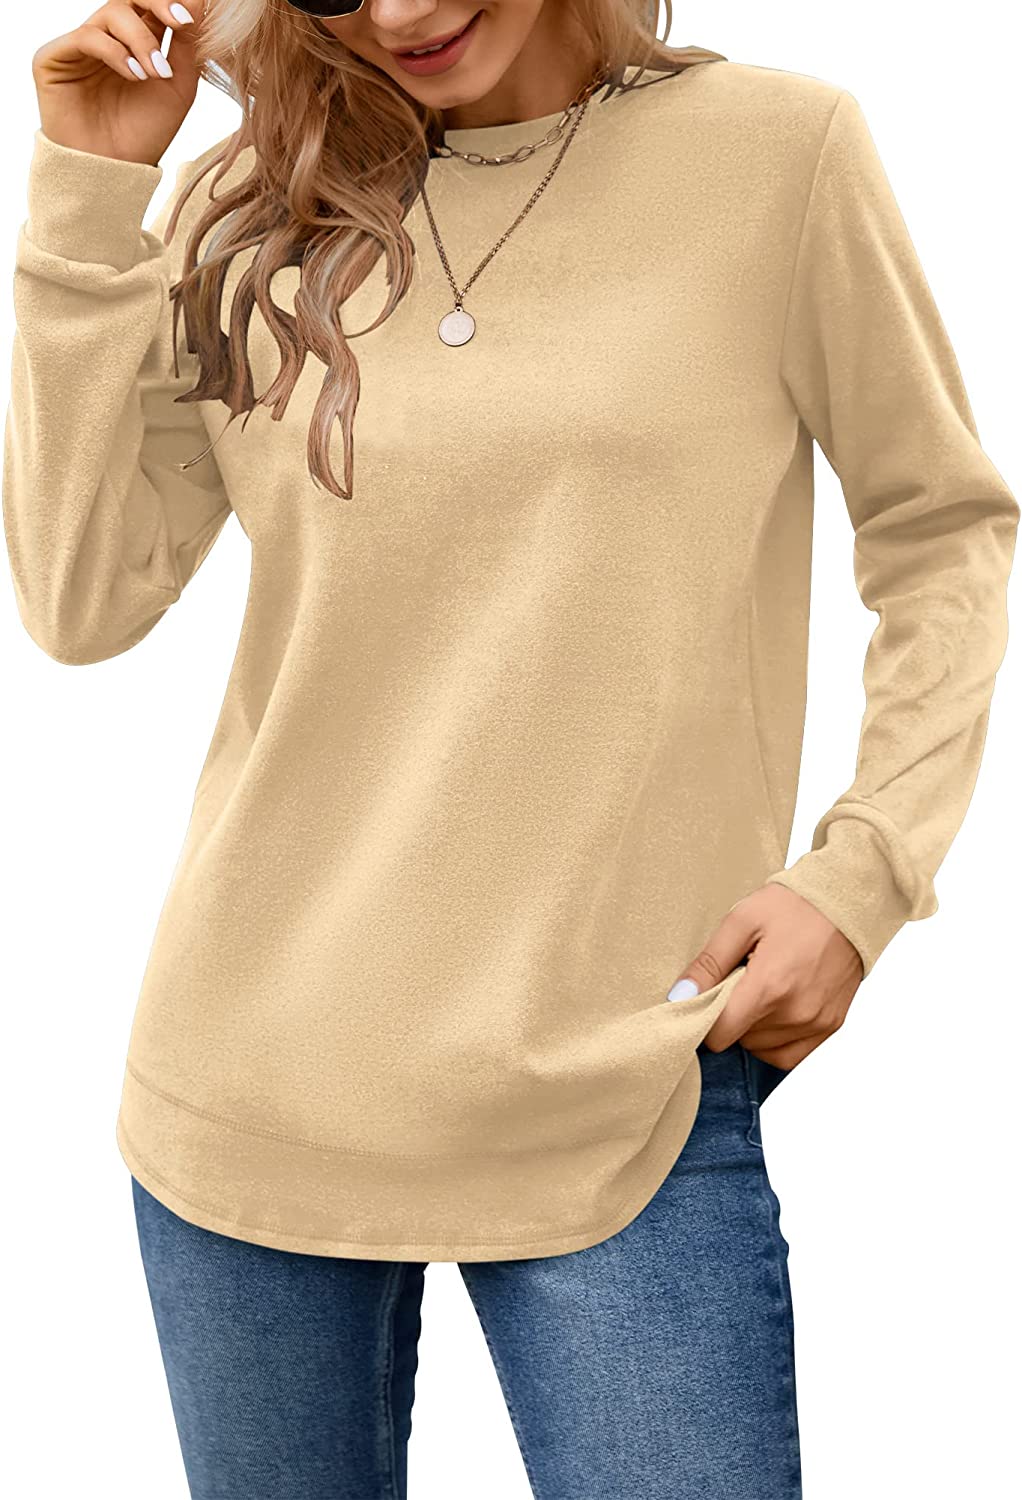 PLMOKEN Crewneck Shirts For Women Long Sleeves Casual Sweatshirt Pullover Tunics  Tops(Caramel,M) at  Women's Clothing store